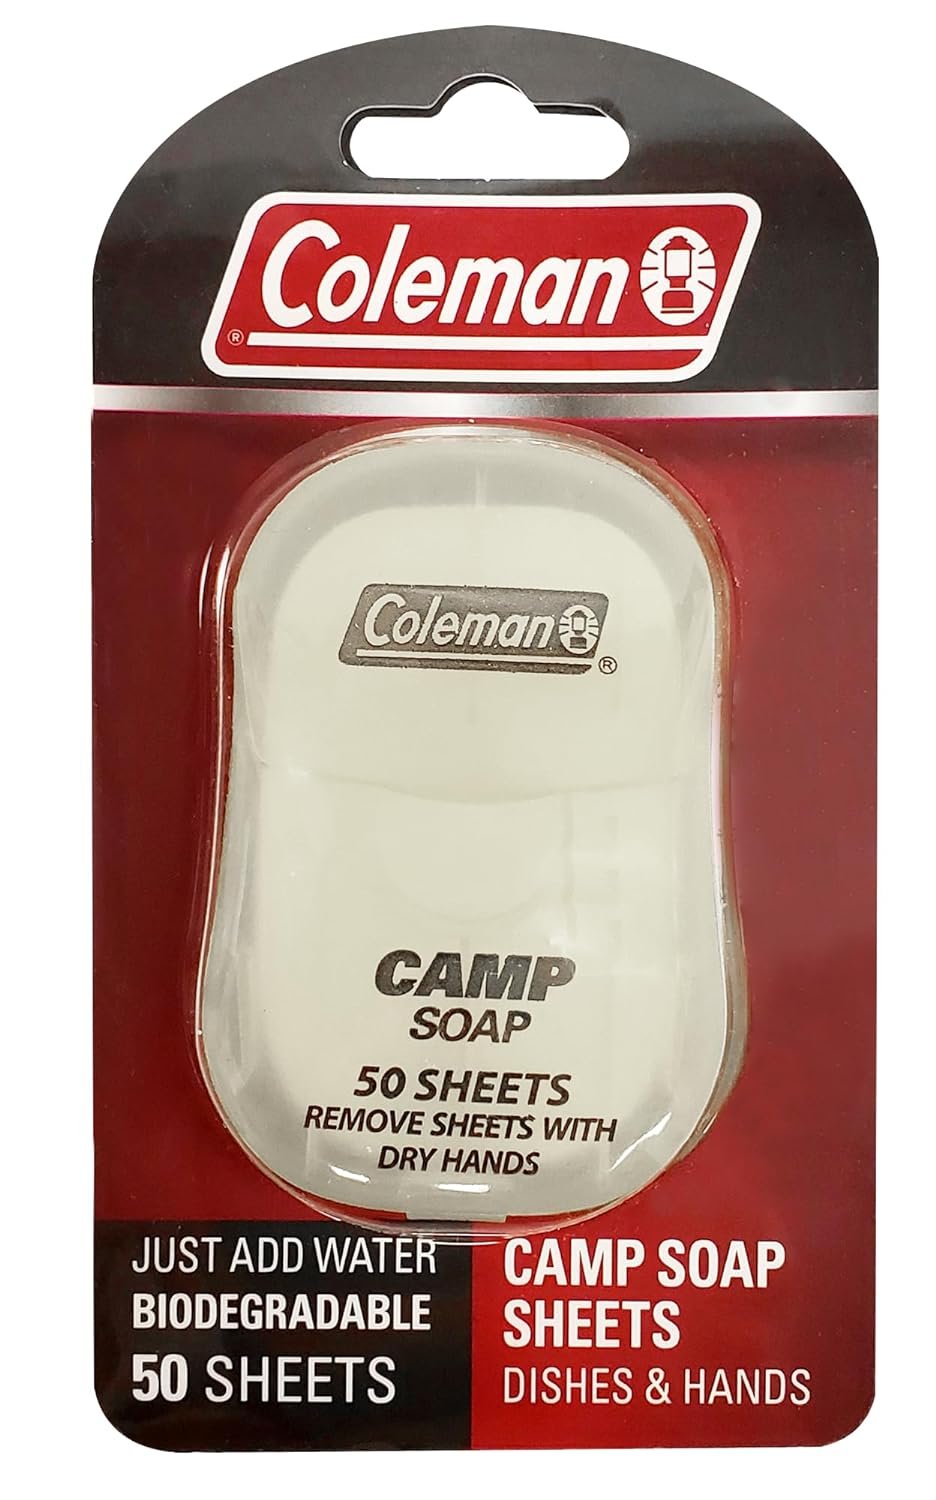 Coleman Camp Soap Sheets Dispenser Review